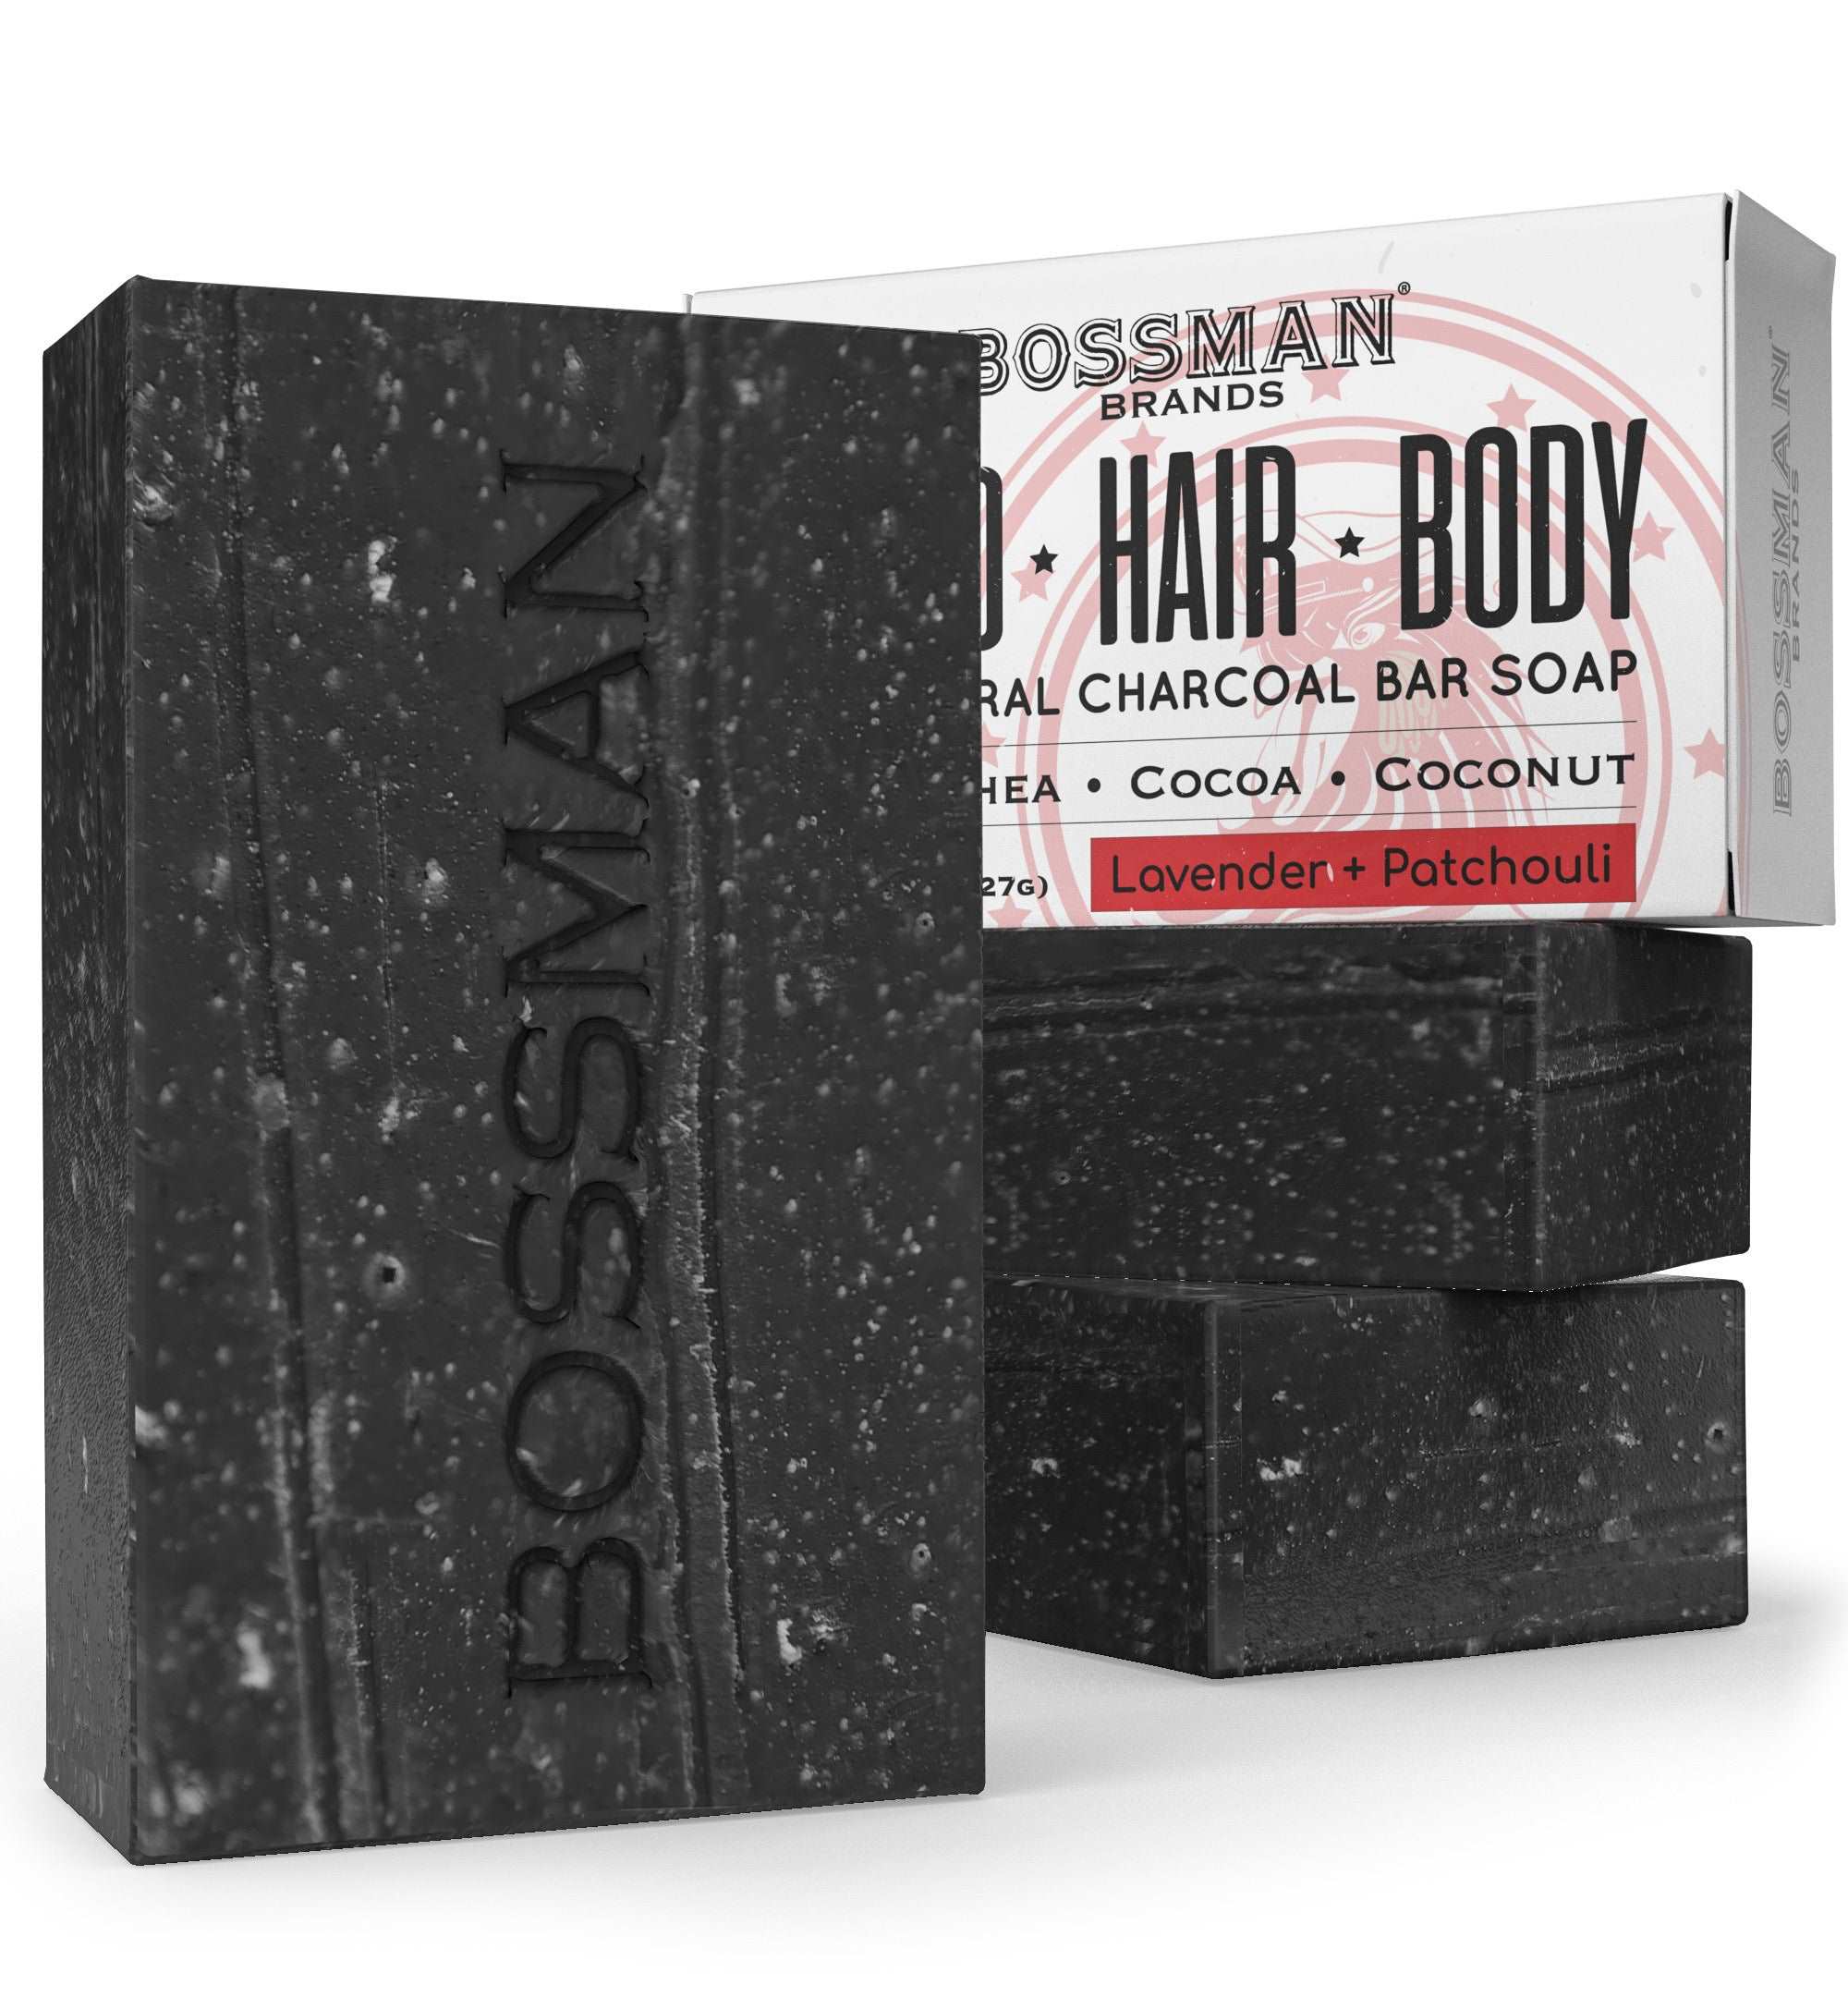 All Natural Exfoliating Beard, Hair & Body Bar Soap Bossman Brands